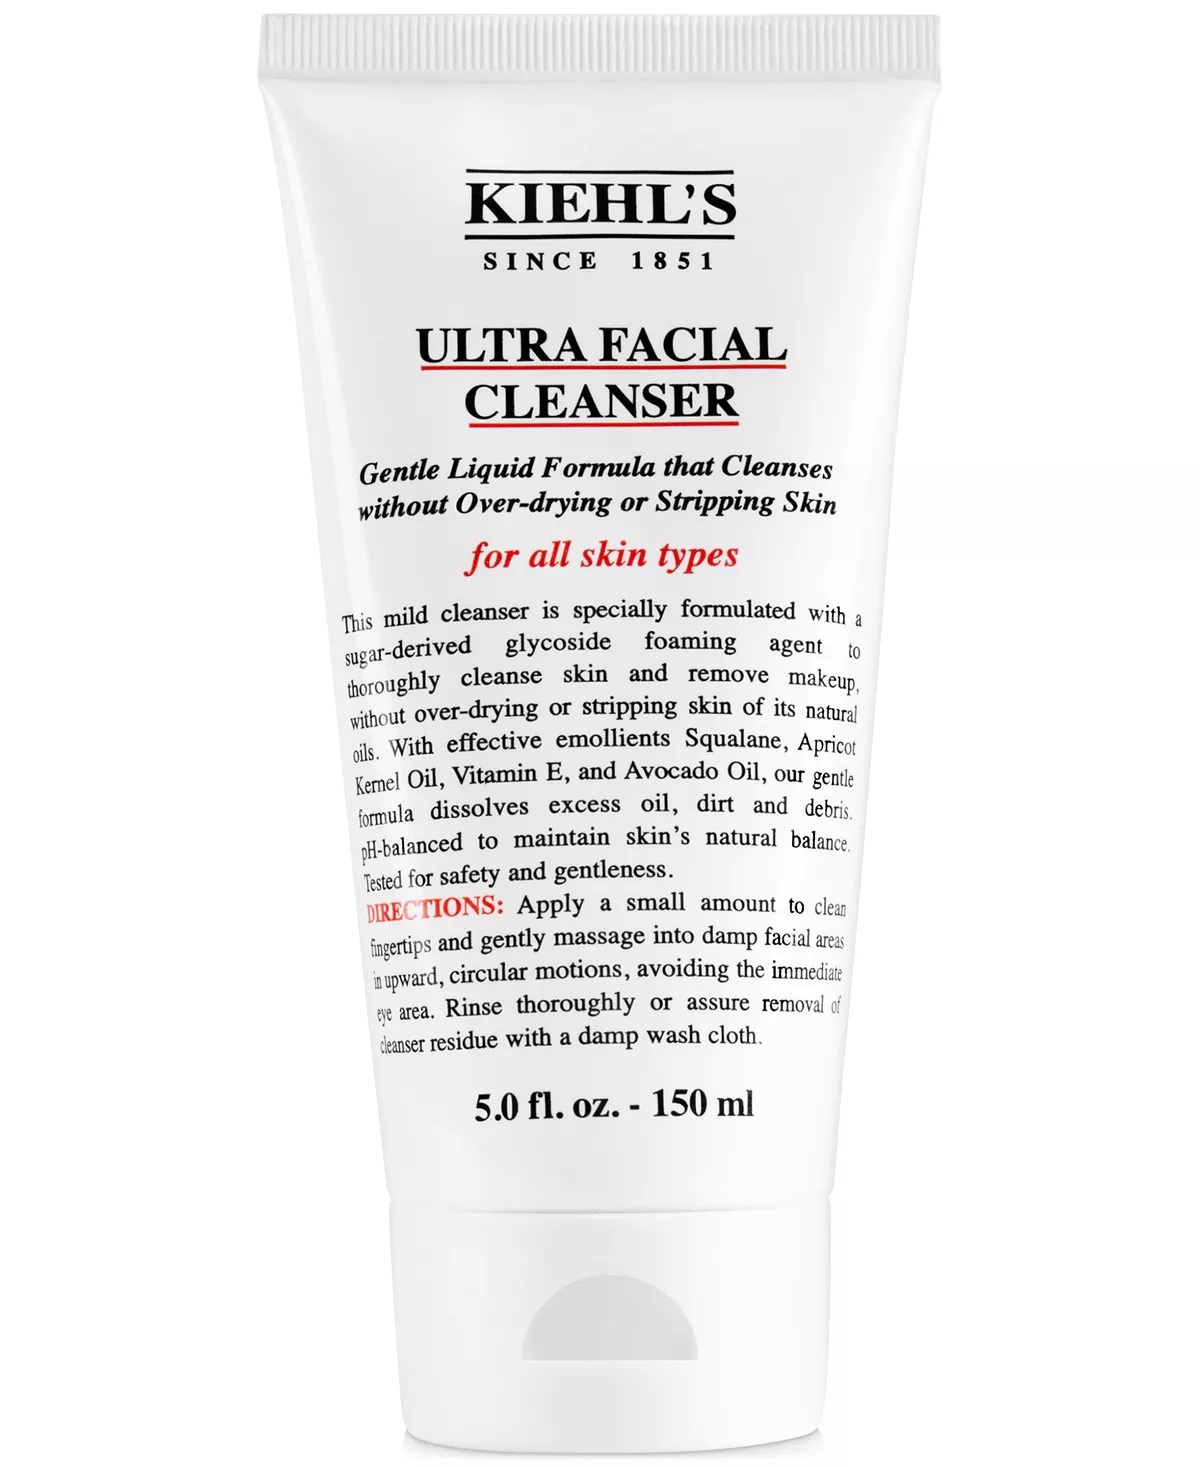 KIEHL'S SINCE 1851 Ultra Facial Cleanser, 5-oz.